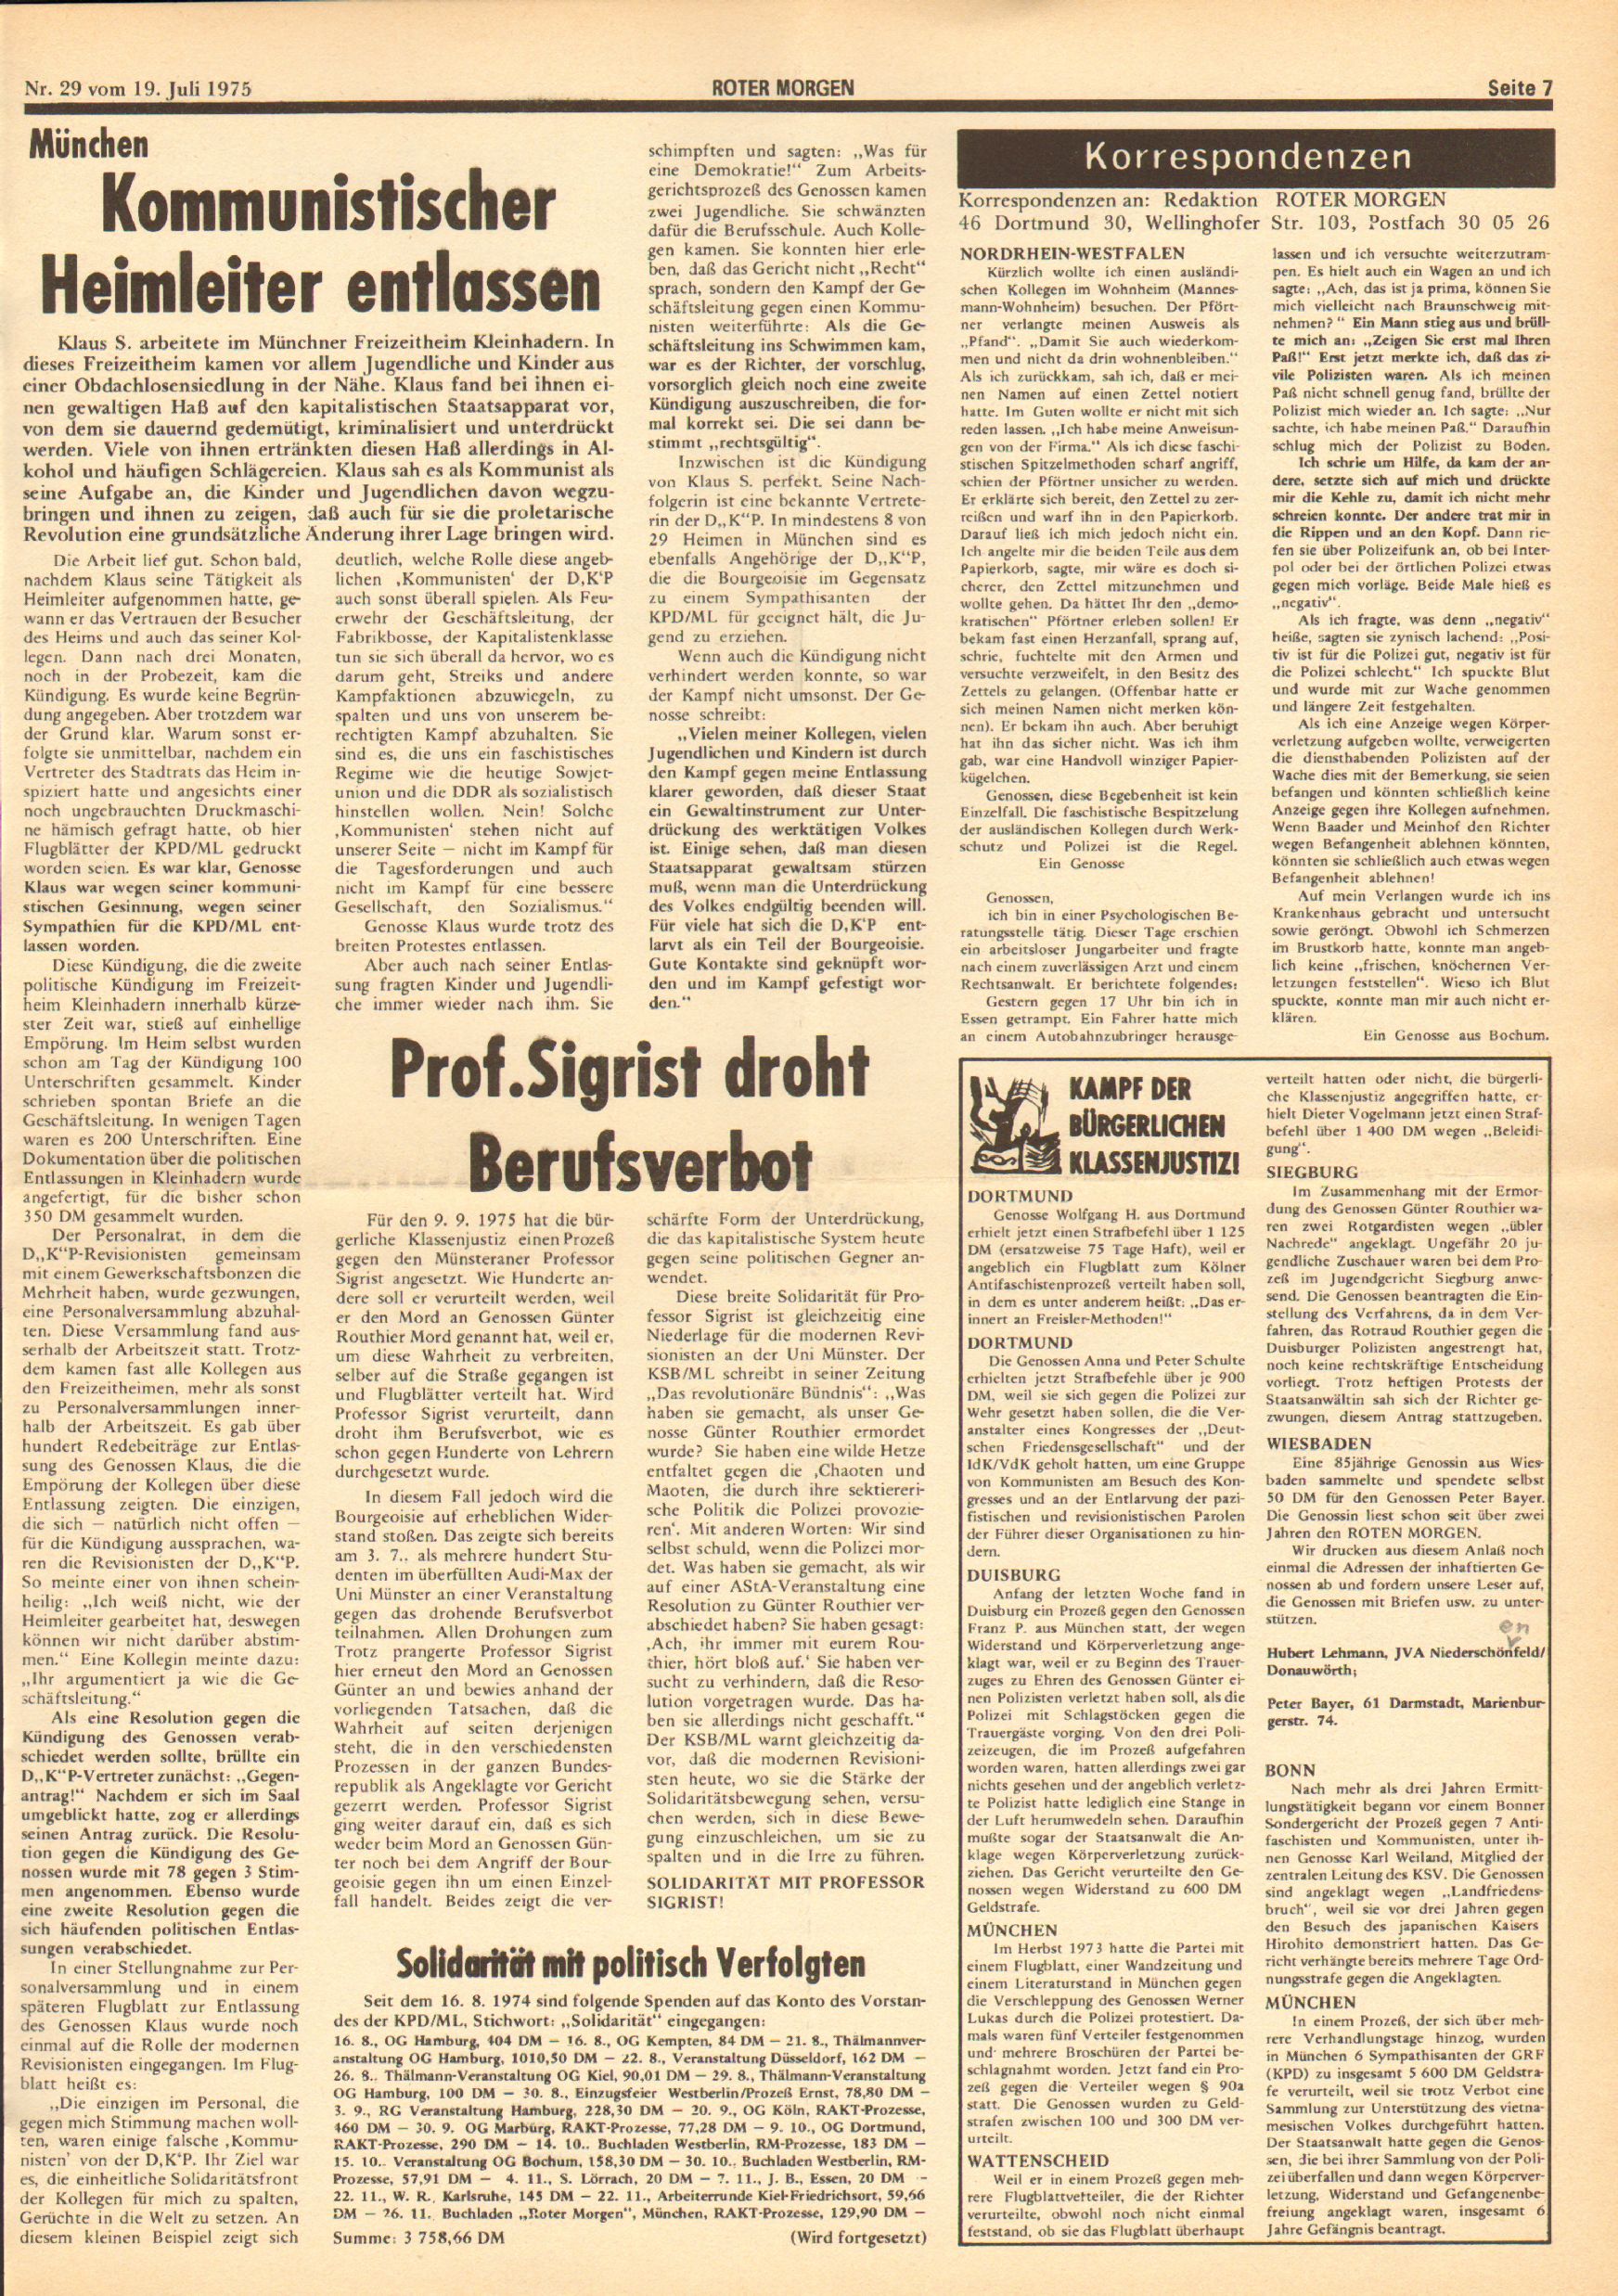 Roter Morgen, 9. Jg., 19. Juli 1975, Nr. 29, Seite 7